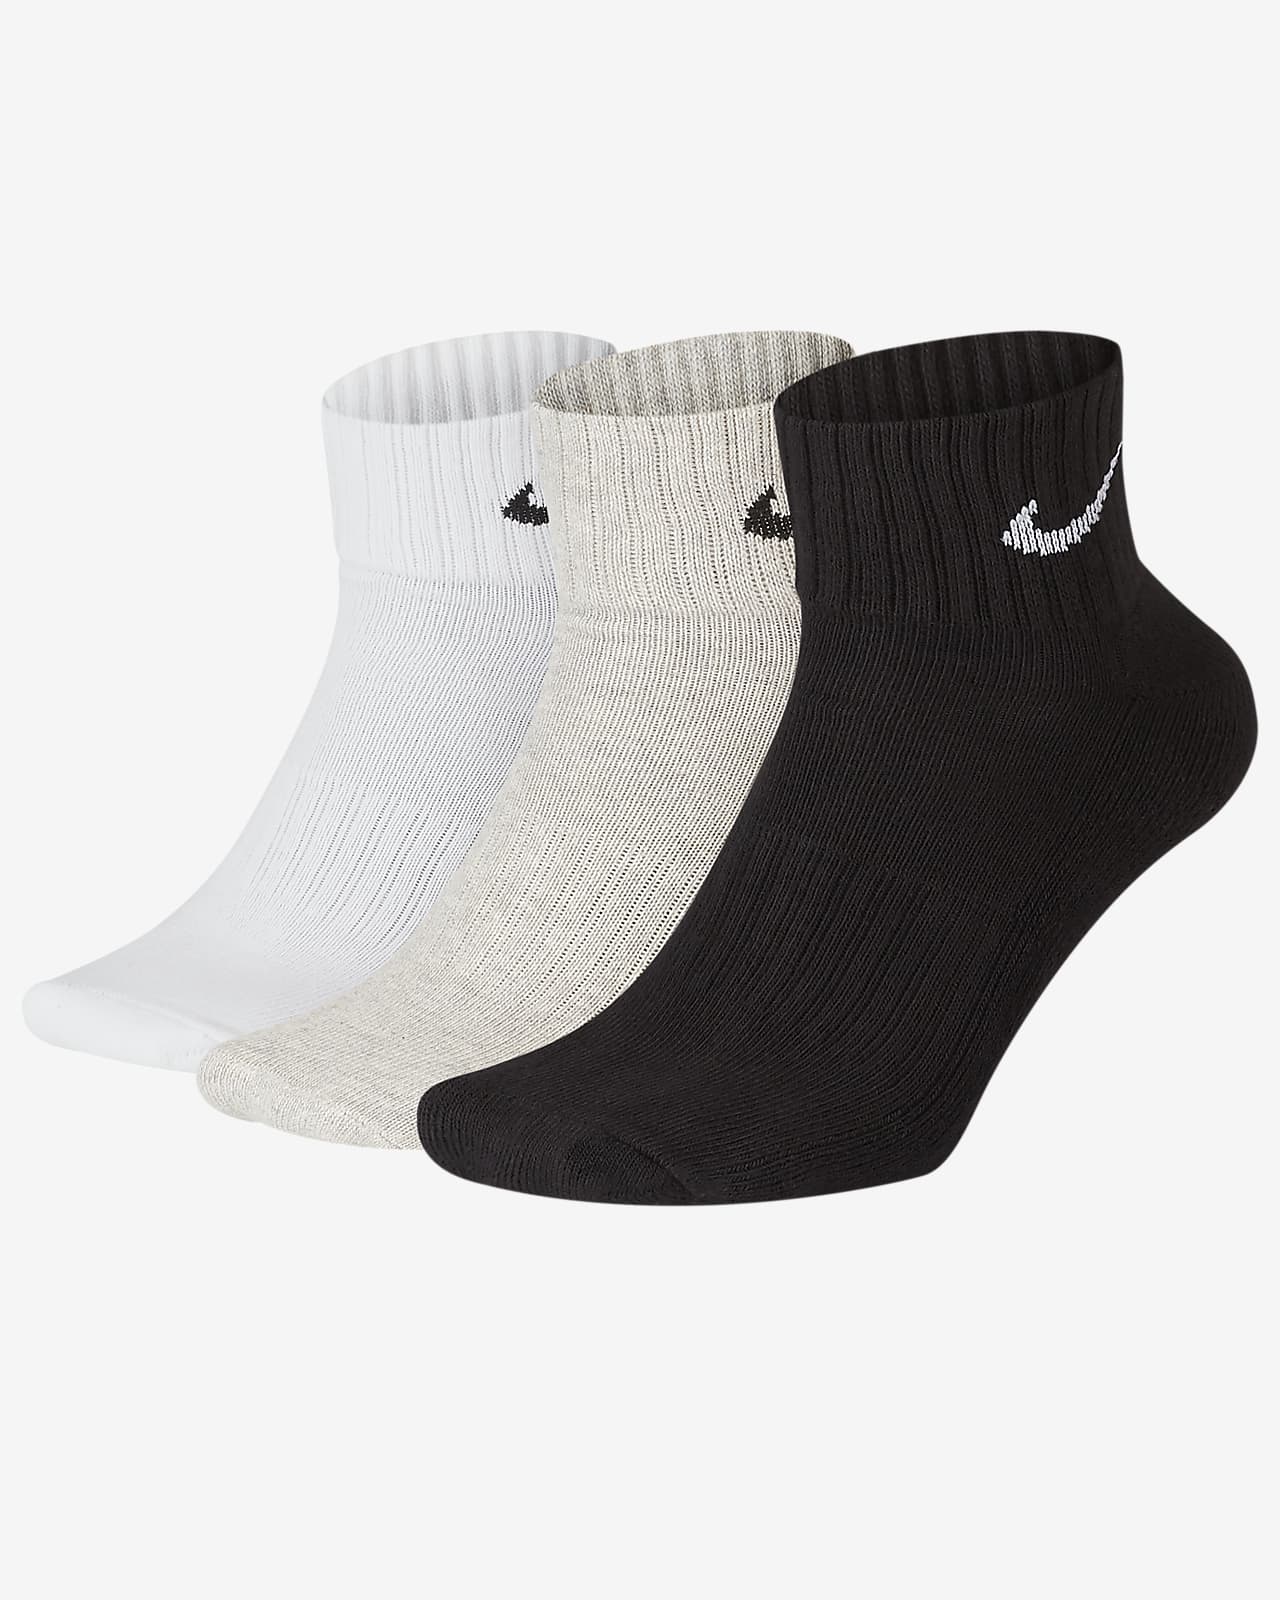 Polstrované kotníkové ponožky Nike (3 páry)